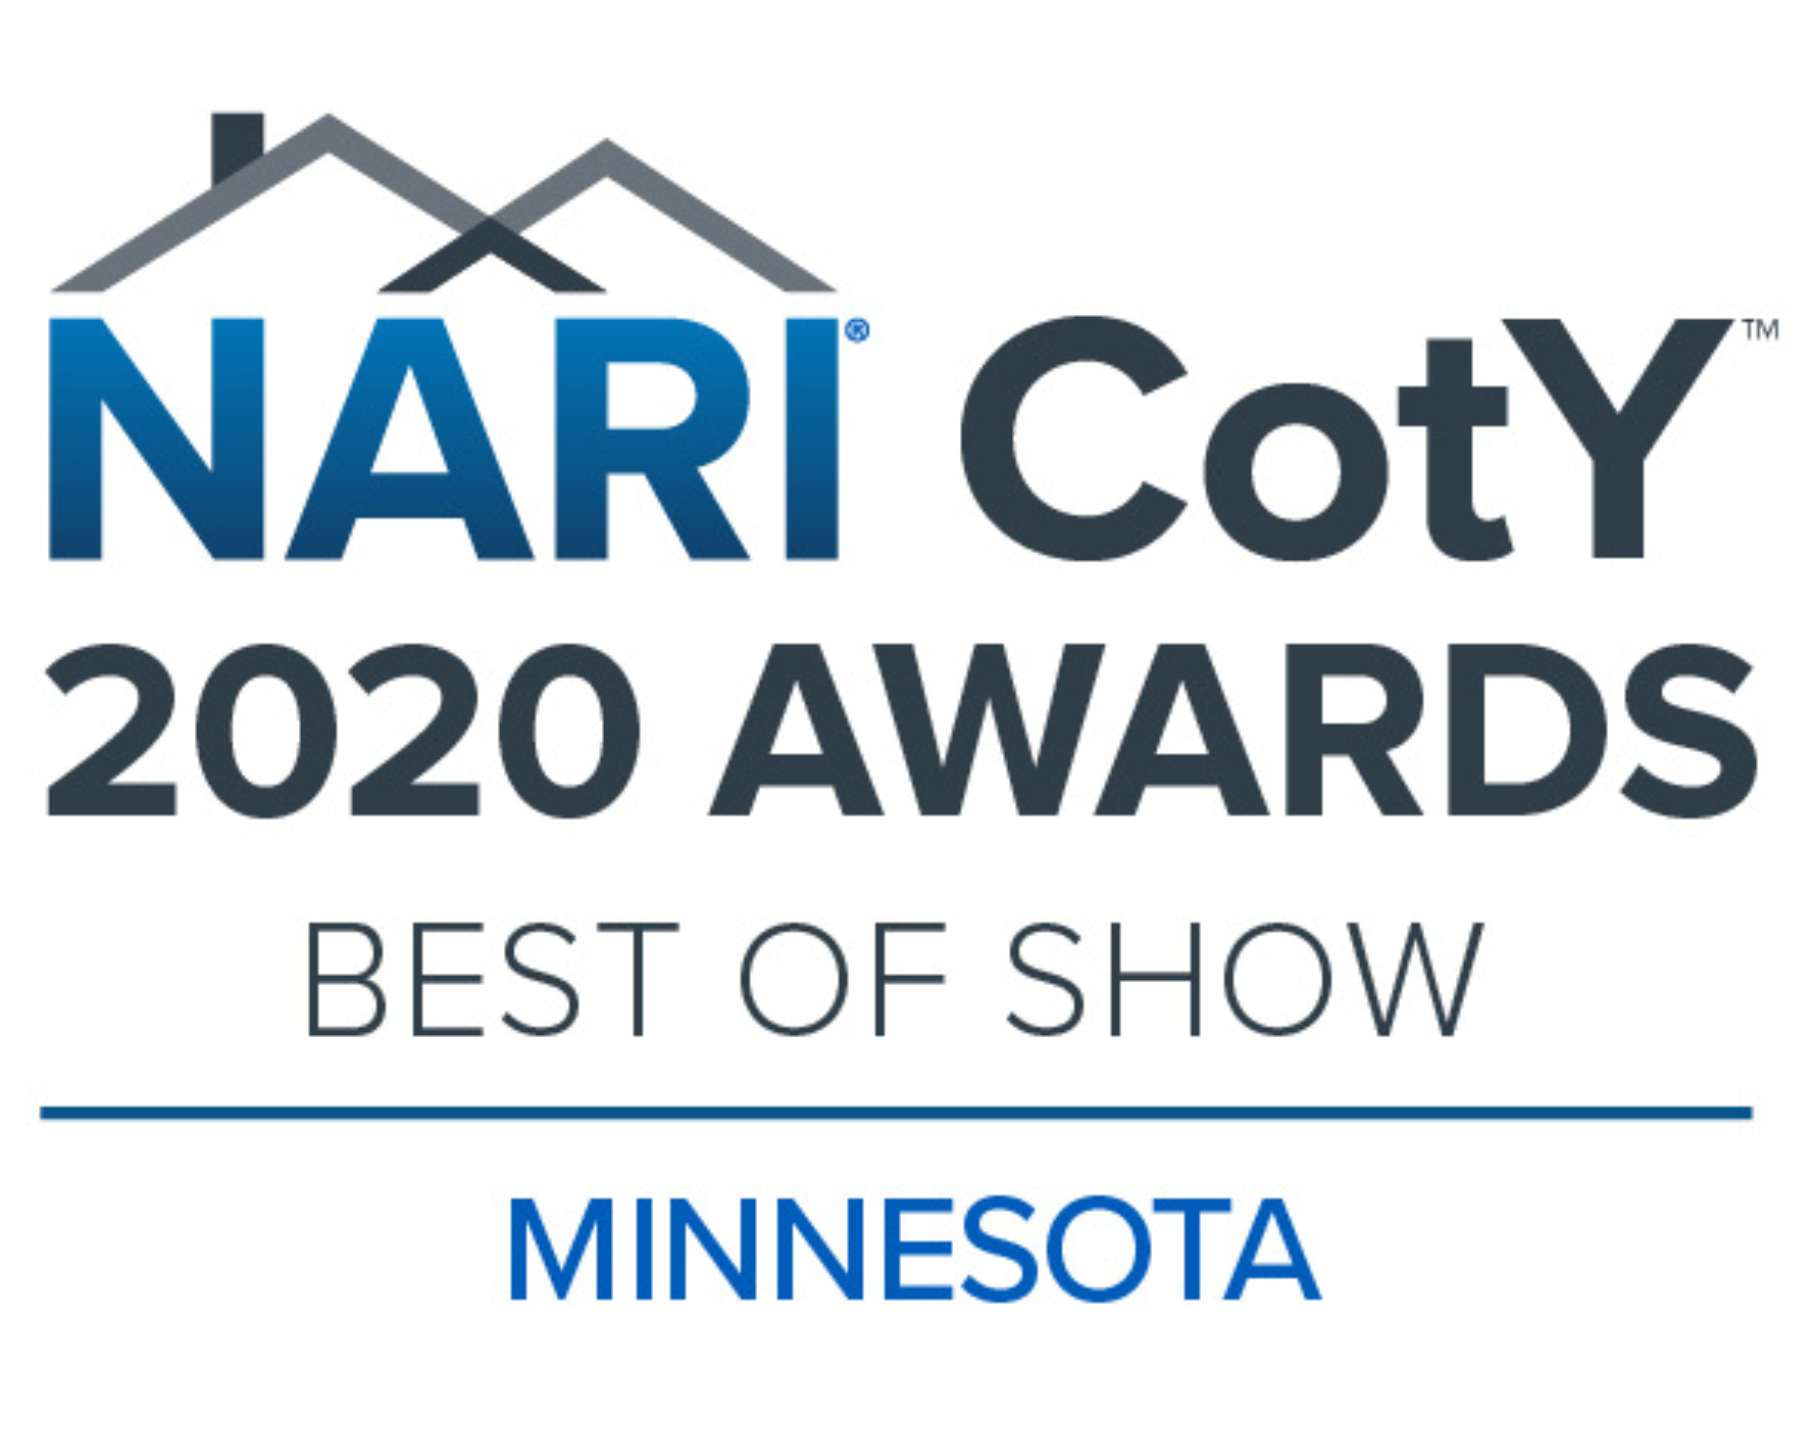 NARI-MN 2019 CotY Awards - Under $25K Residential Bath - Gold Award